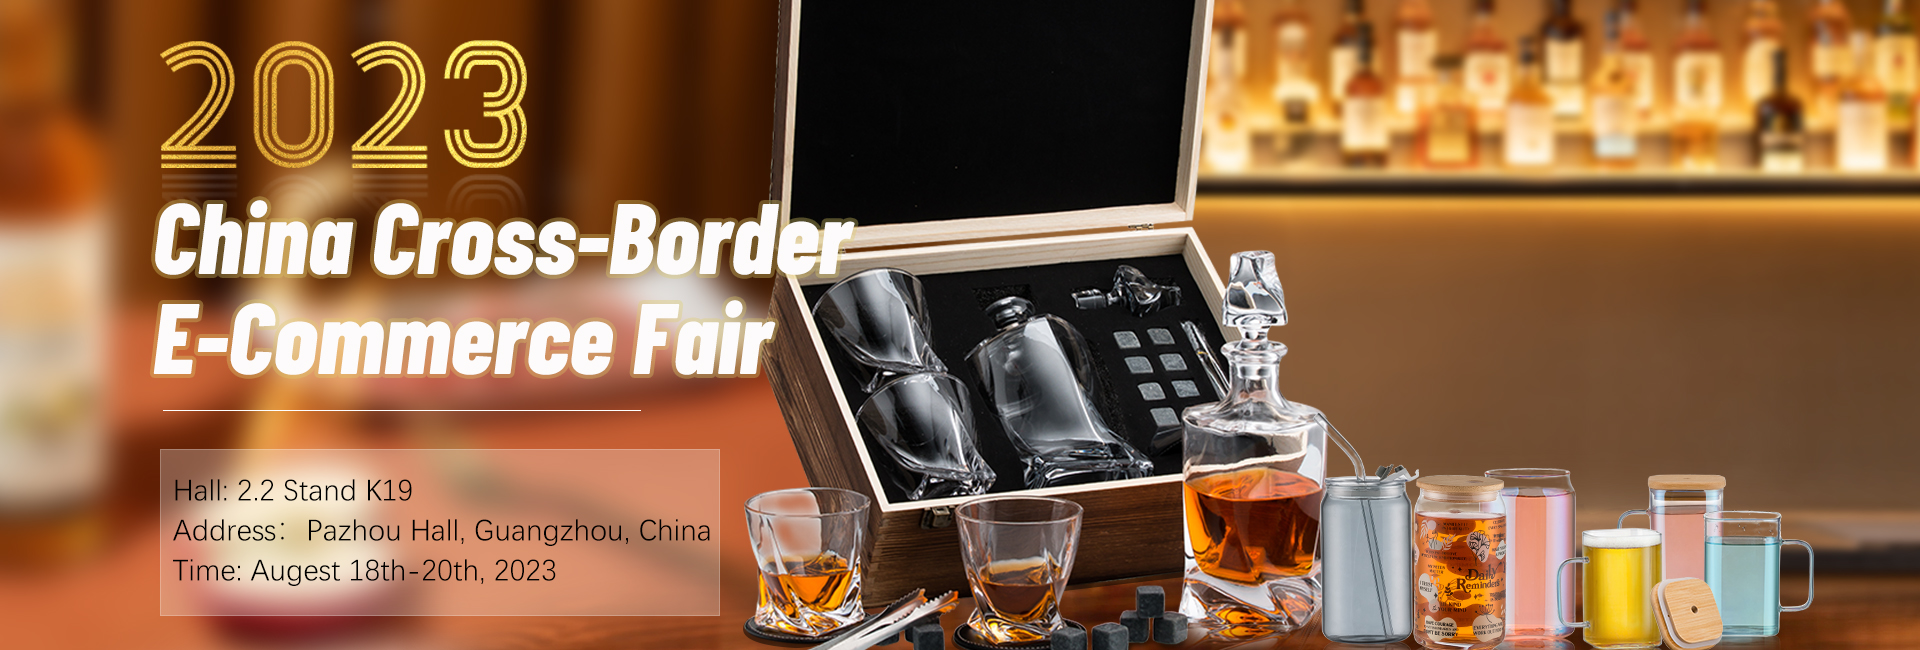 China Cross-Border E-Commerce Fair 2023